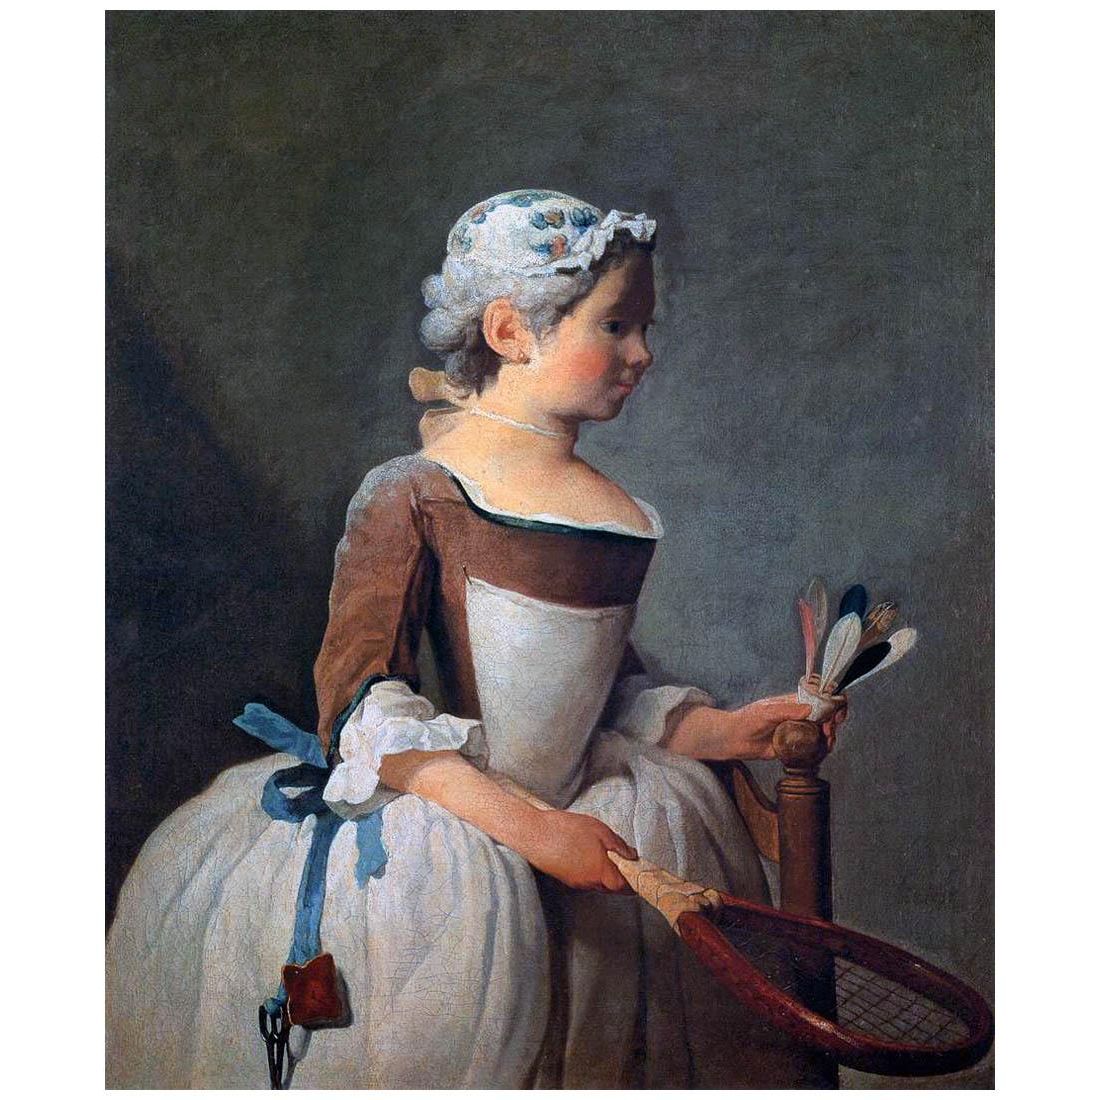 Jean-Baptiste Chardin. Fille avec raquette et volant. 1740. Uffizi